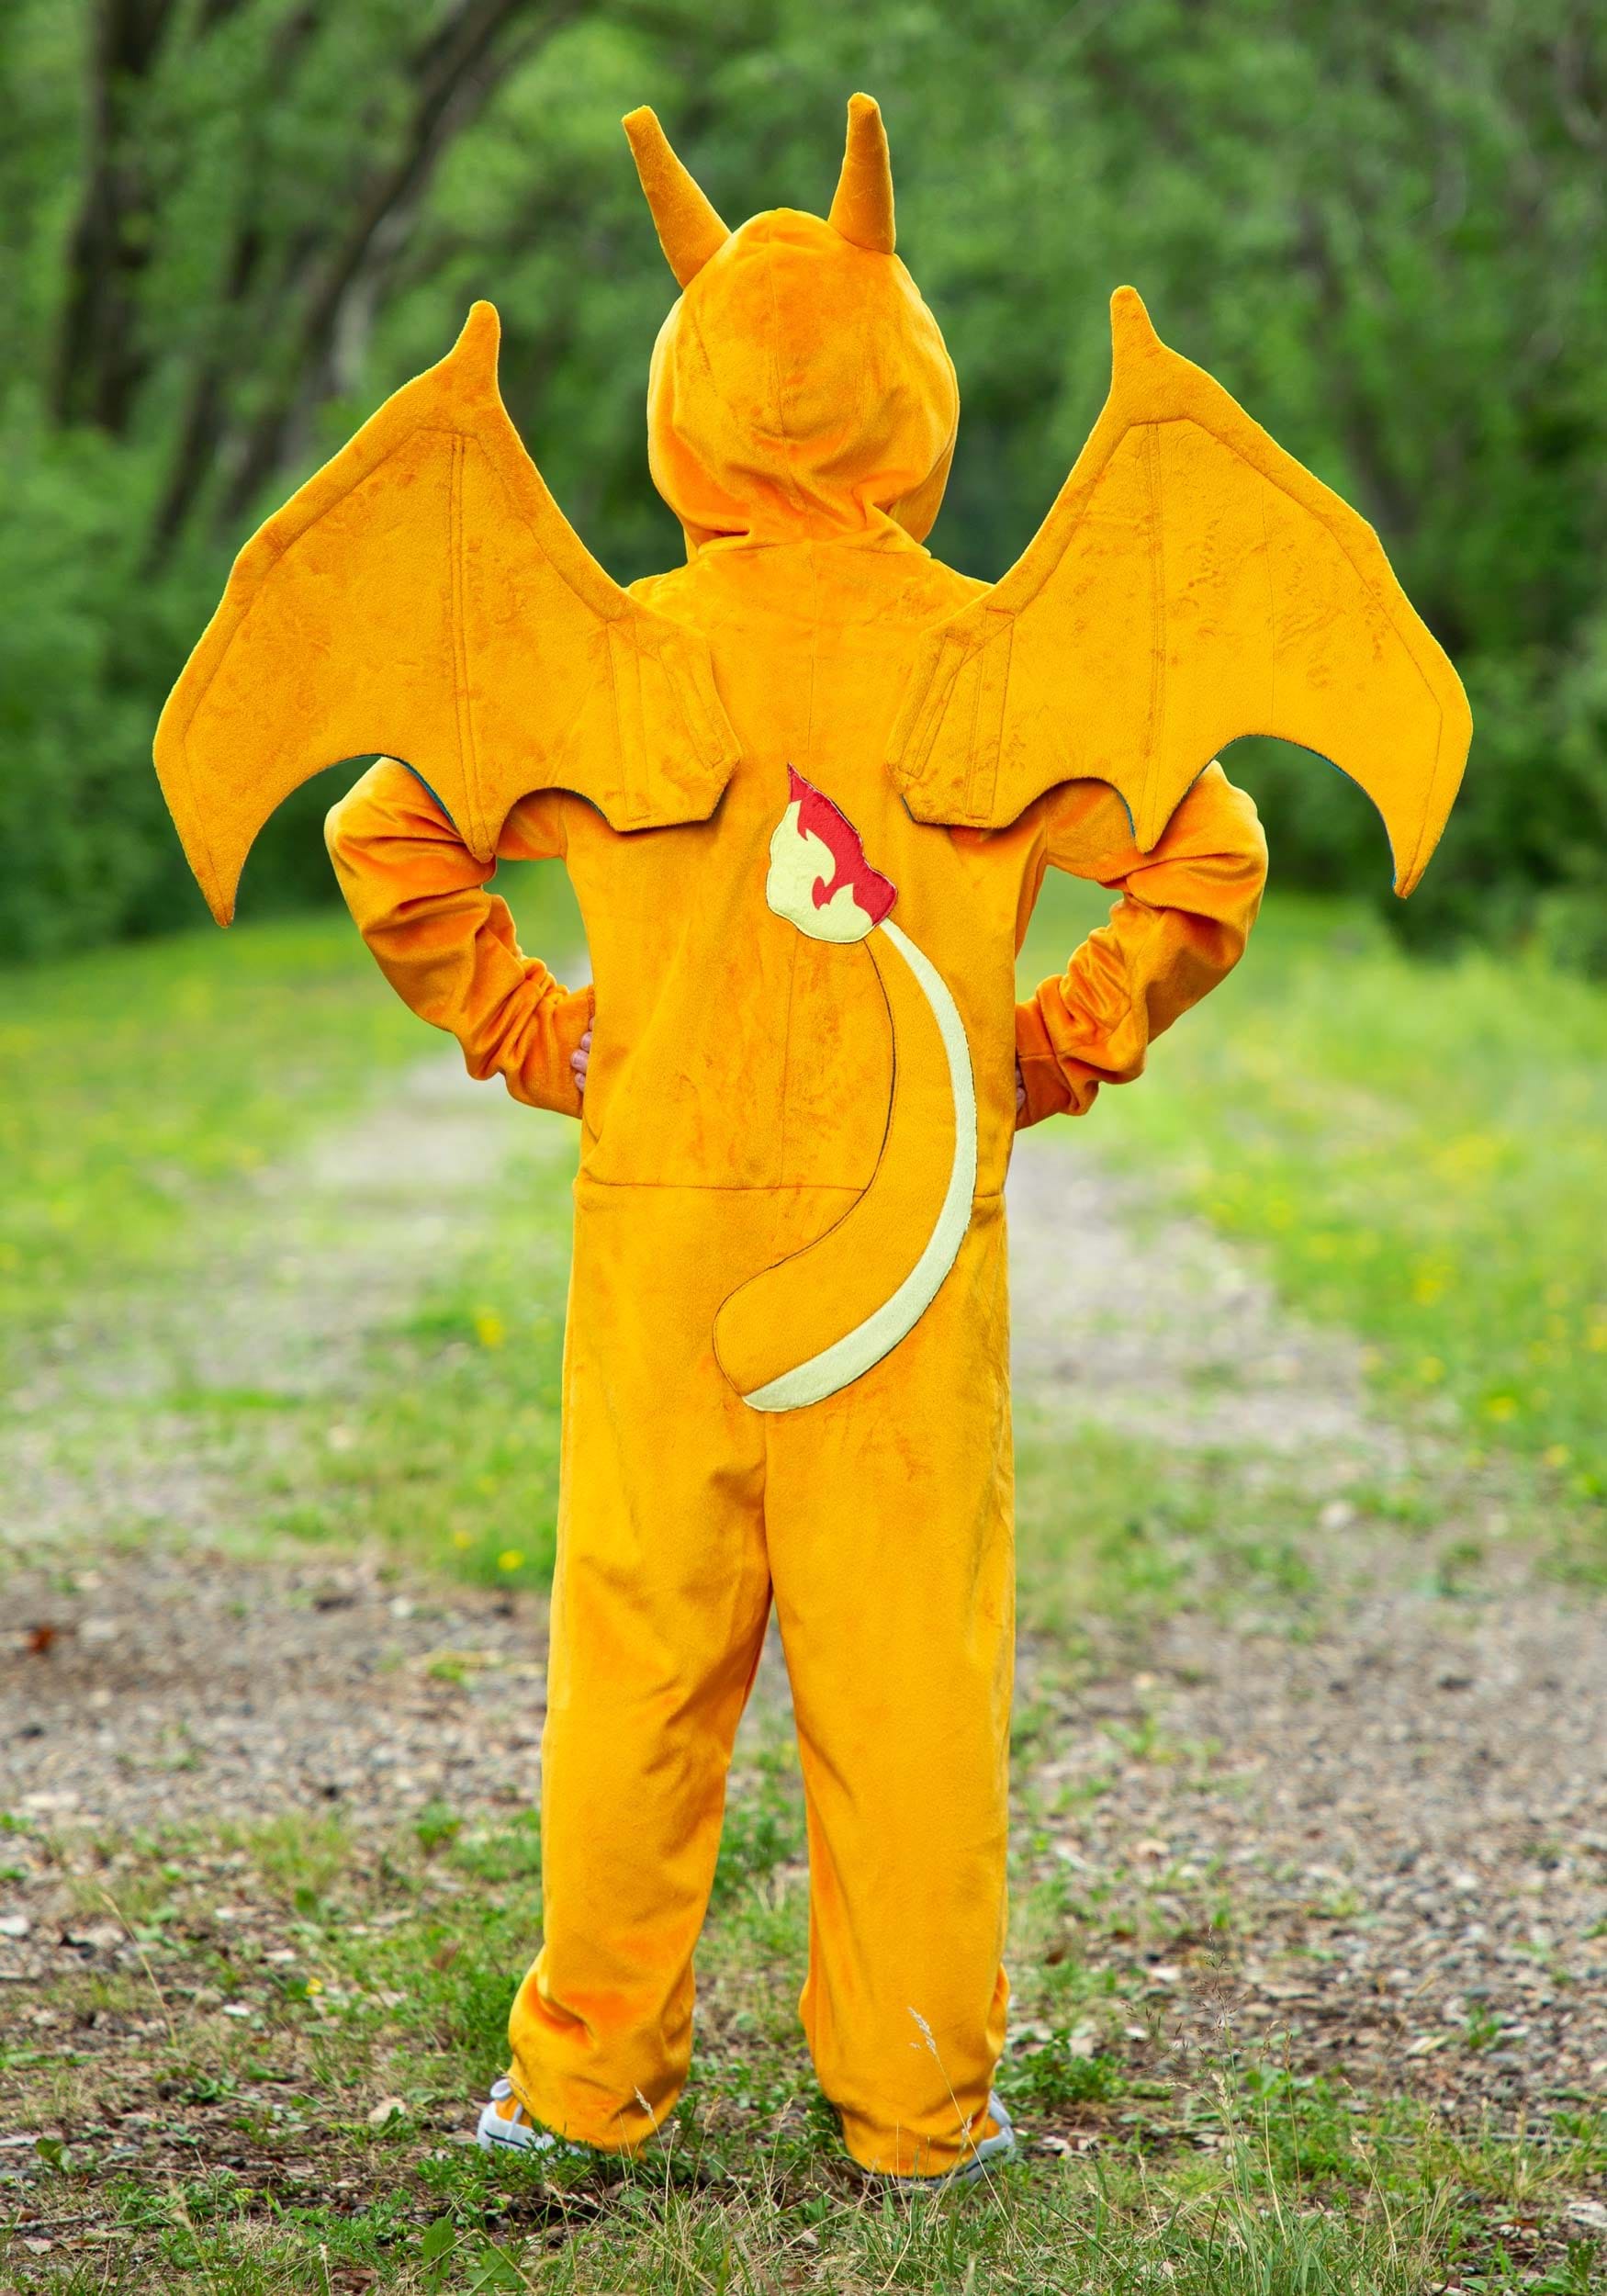 Pokémon Kid's Charizard Deluxe Costume